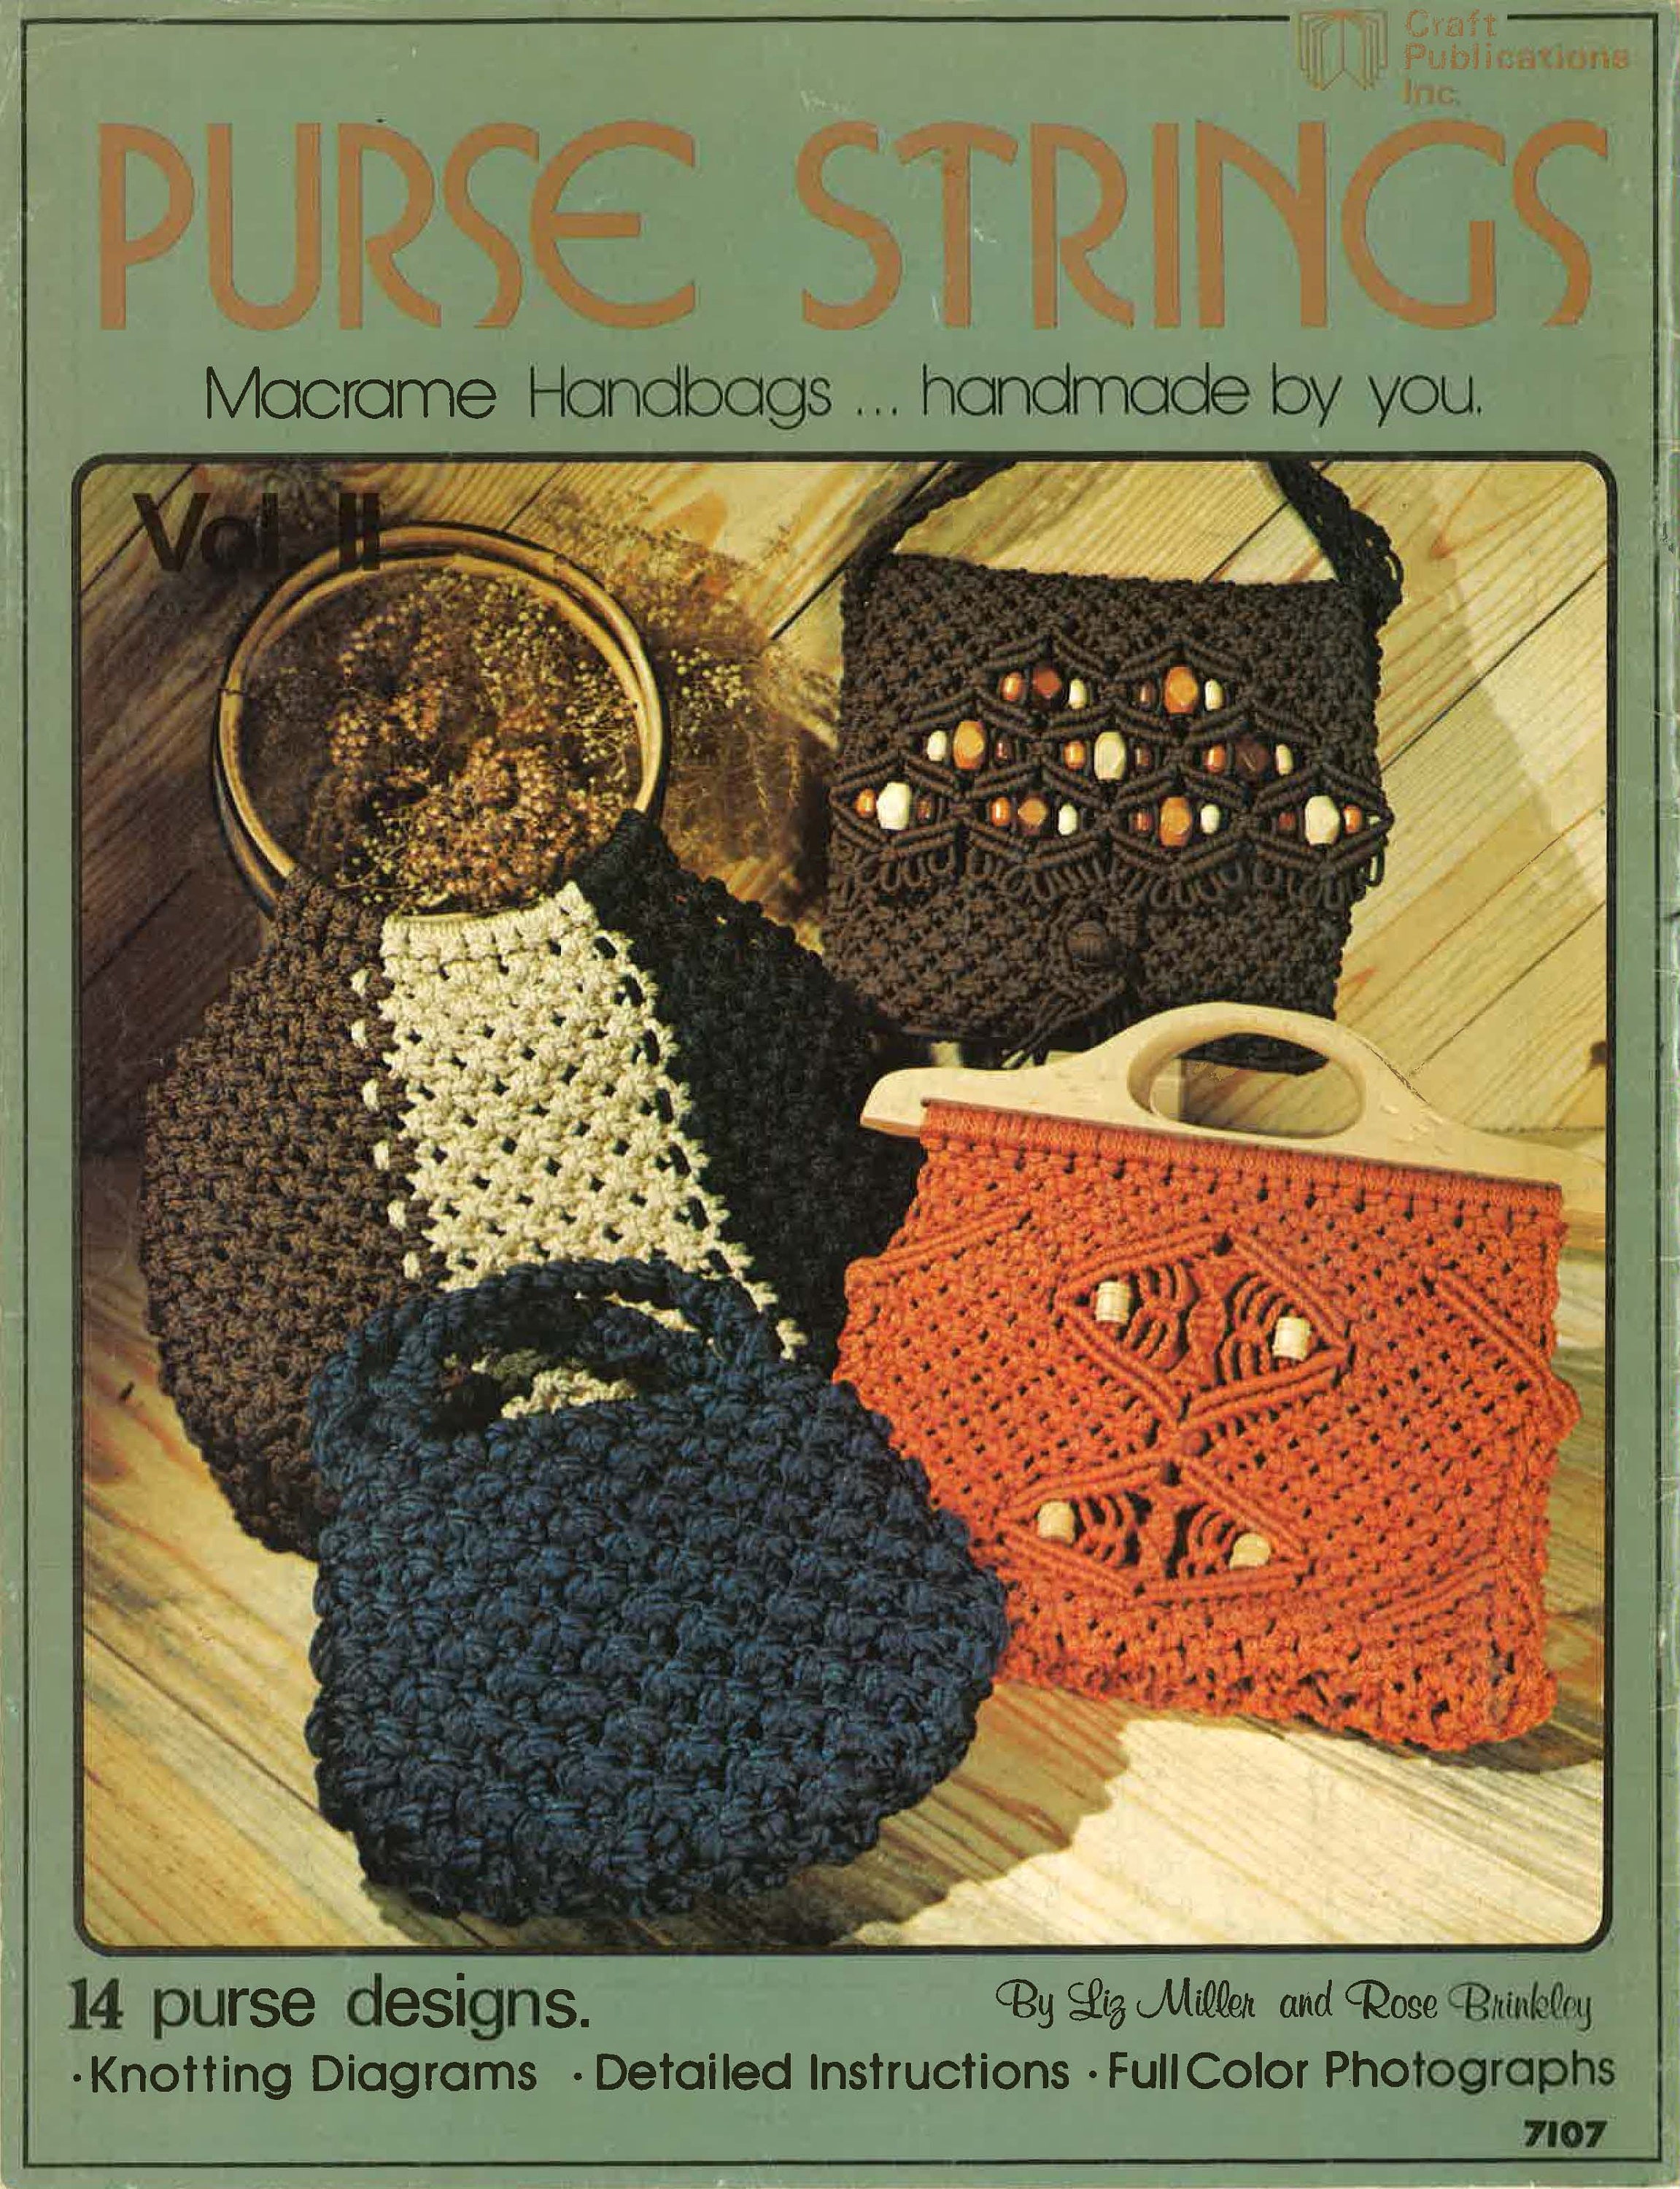 LOT OF 2 Vtg Macrame Pattern Books 1970s Retro Handbag Purse - Pursemaker  $5.99 - PicClick